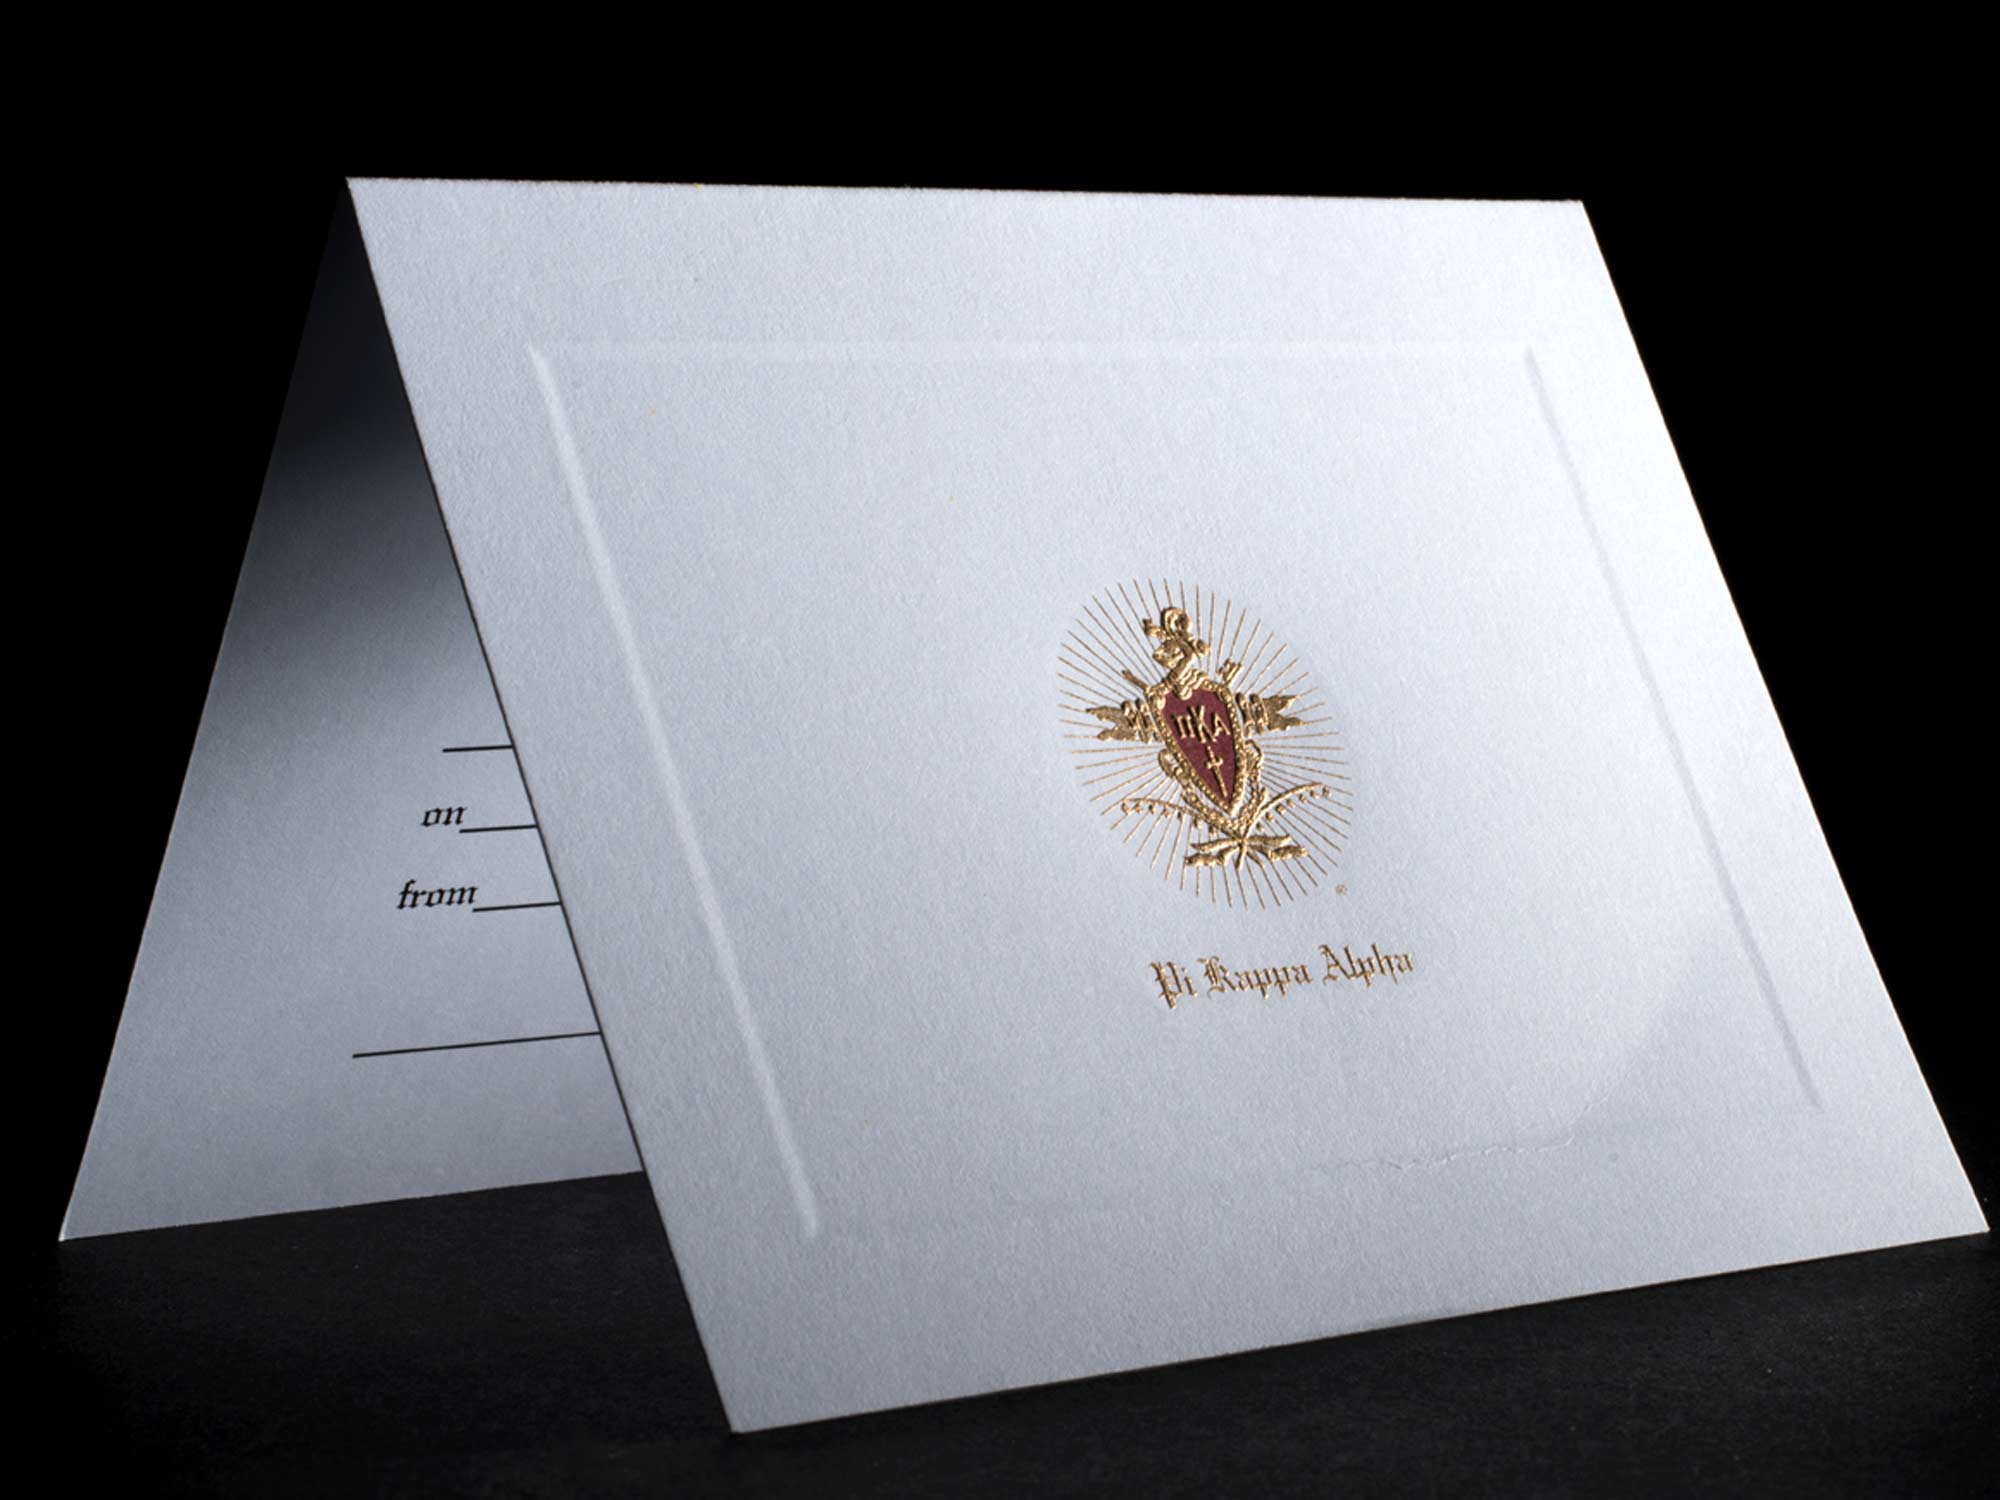 Engraved Invitations Pi Kappa Alpha